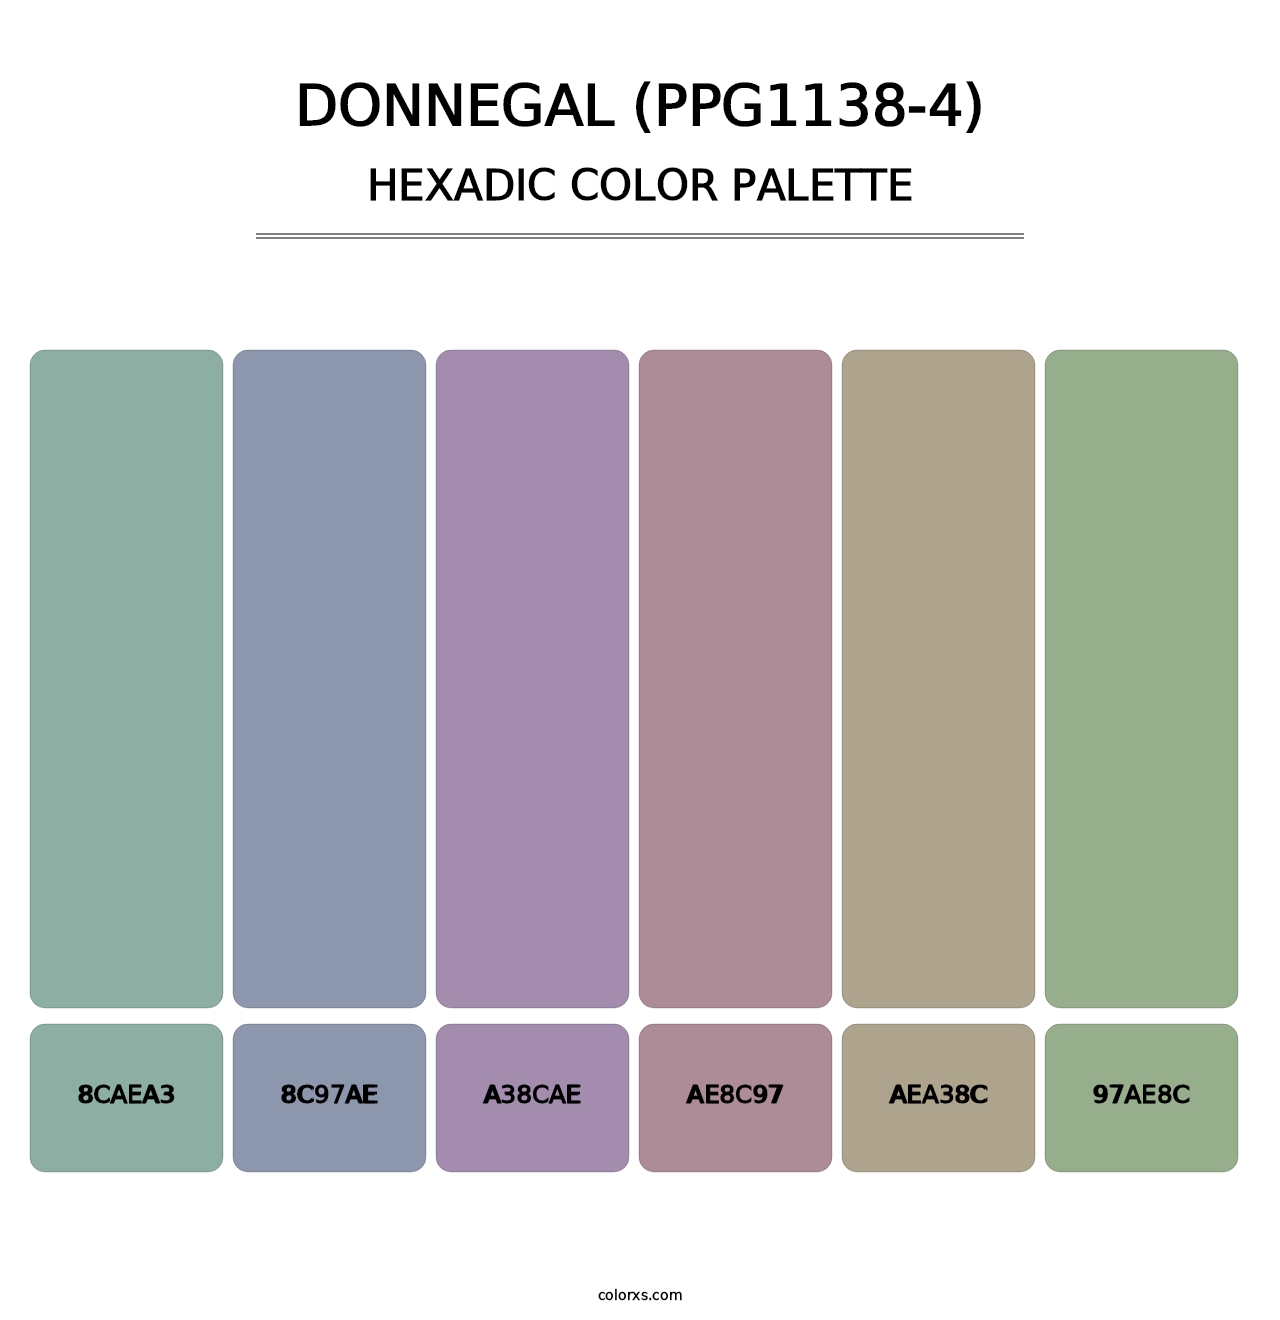 Donnegal (PPG1138-4) - Hexadic Color Palette